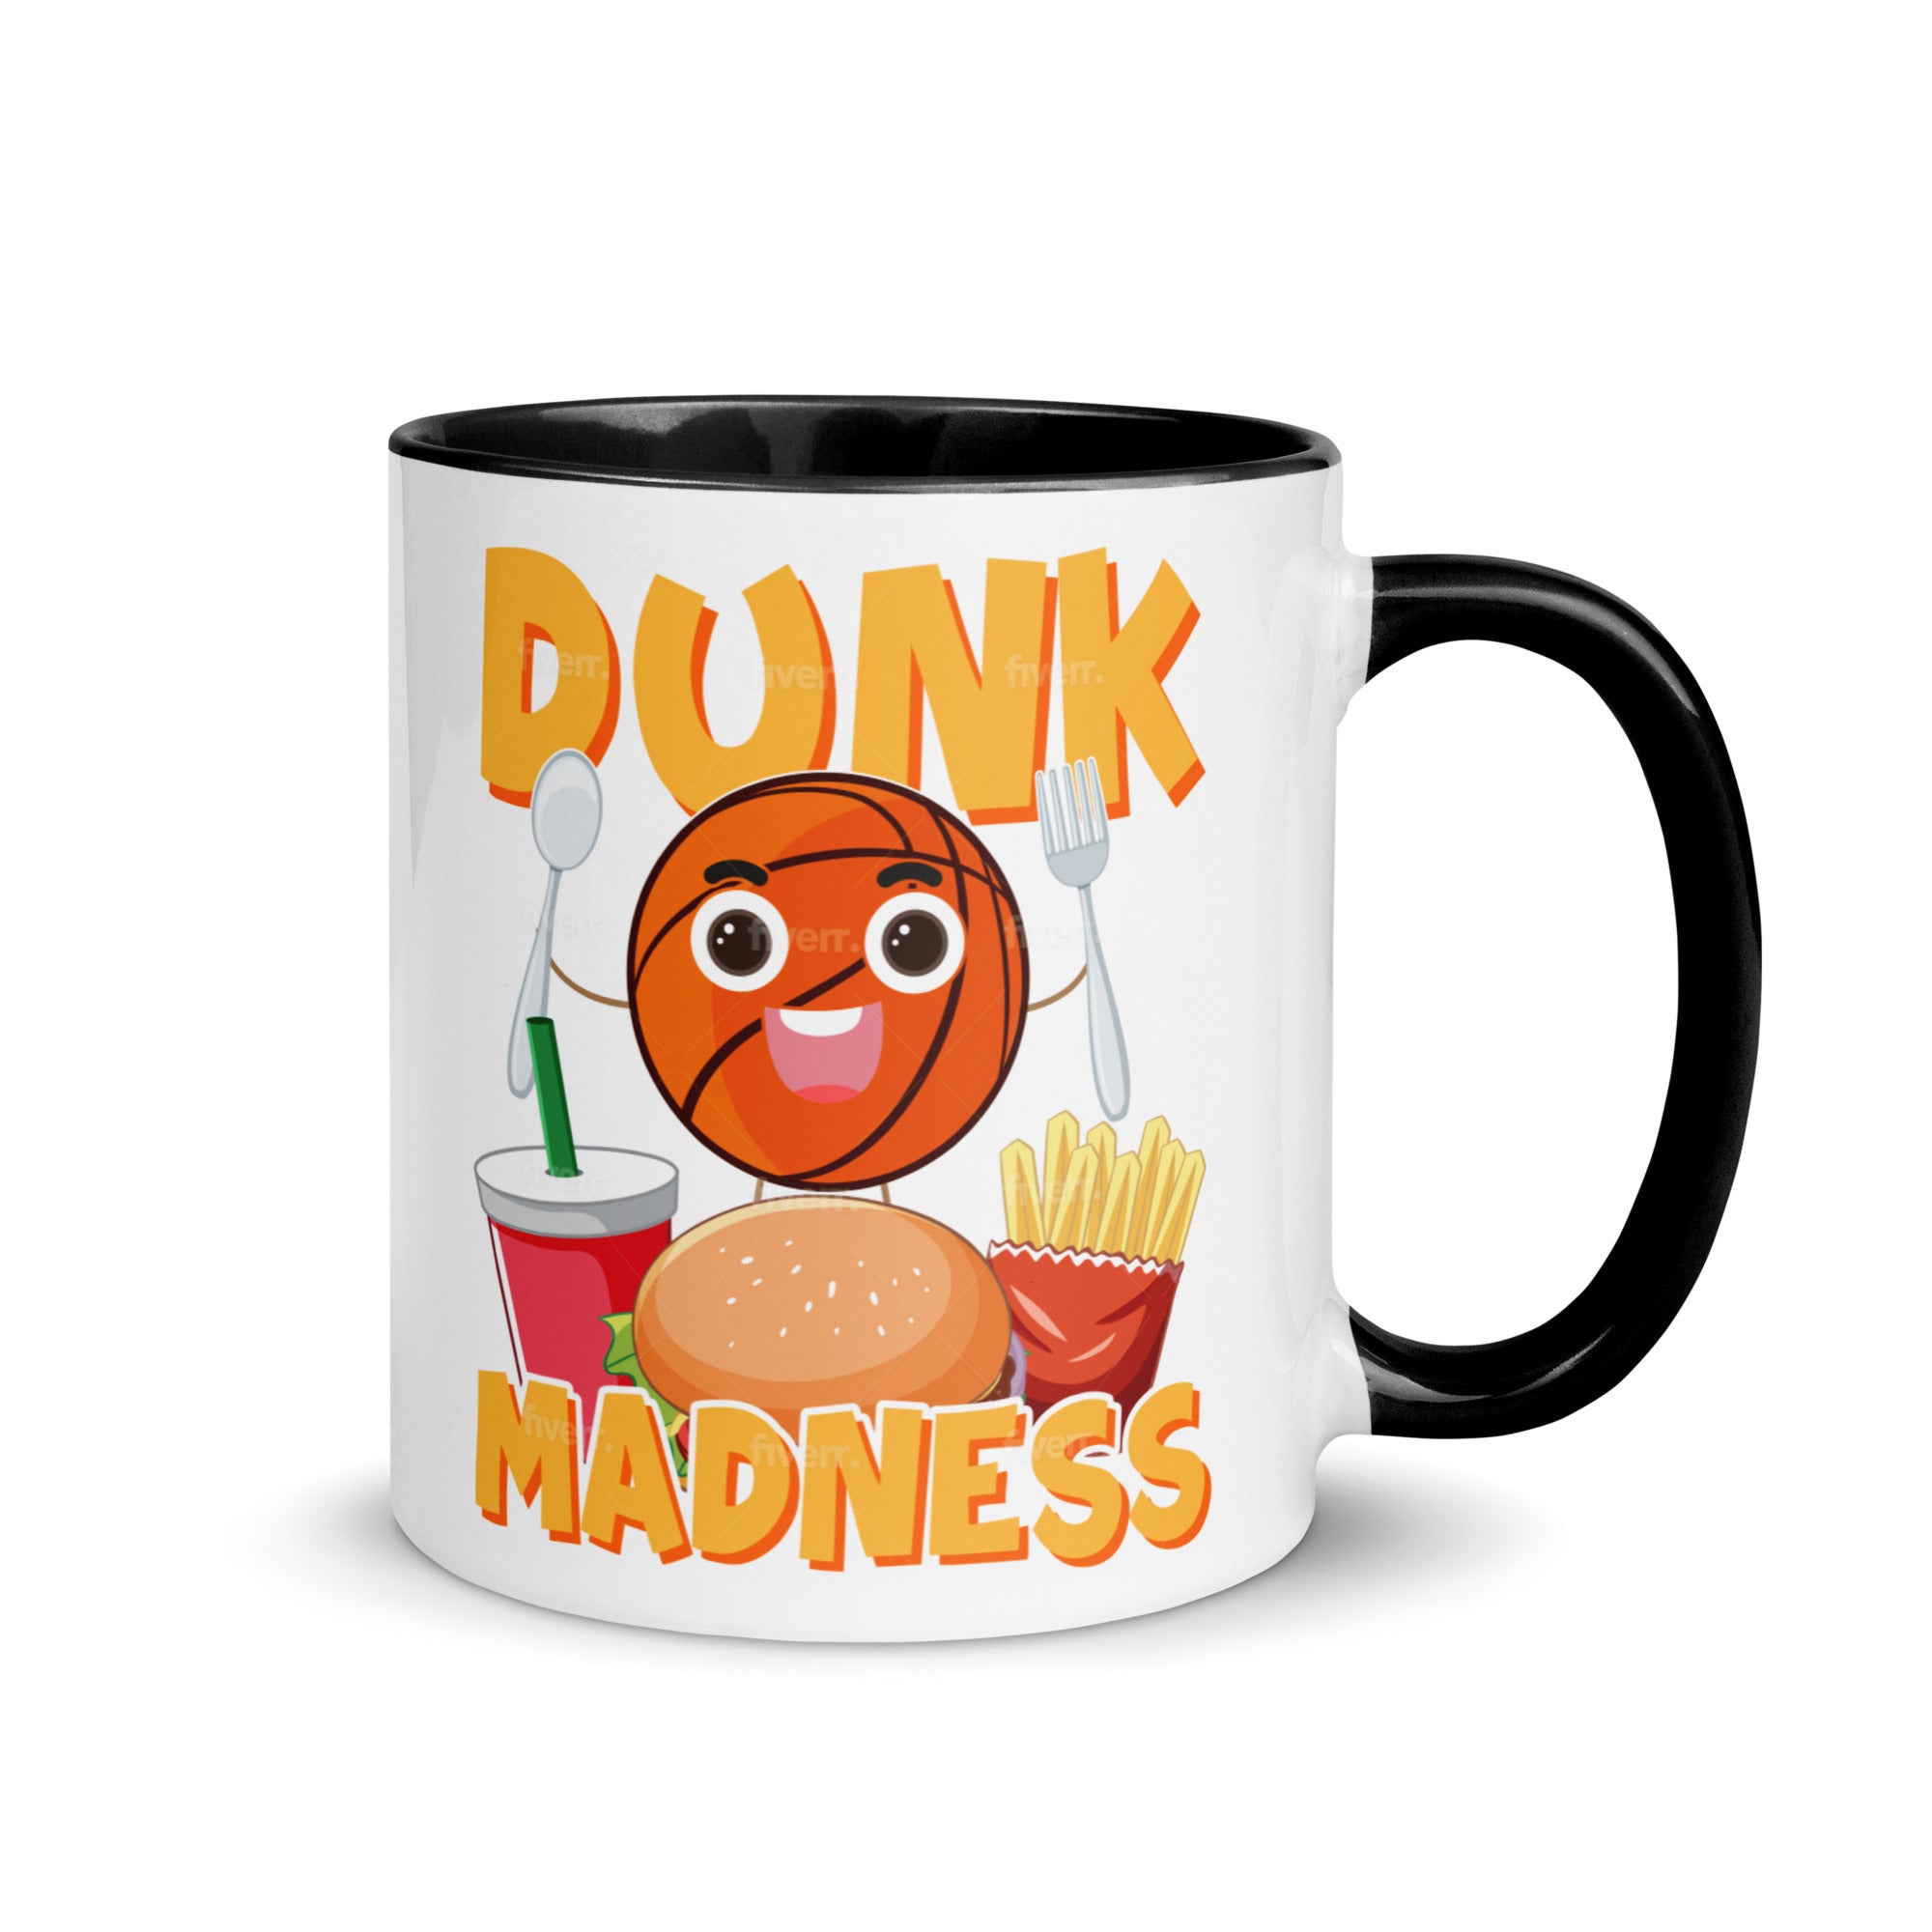 Dunk Madness Mug with Color Inside